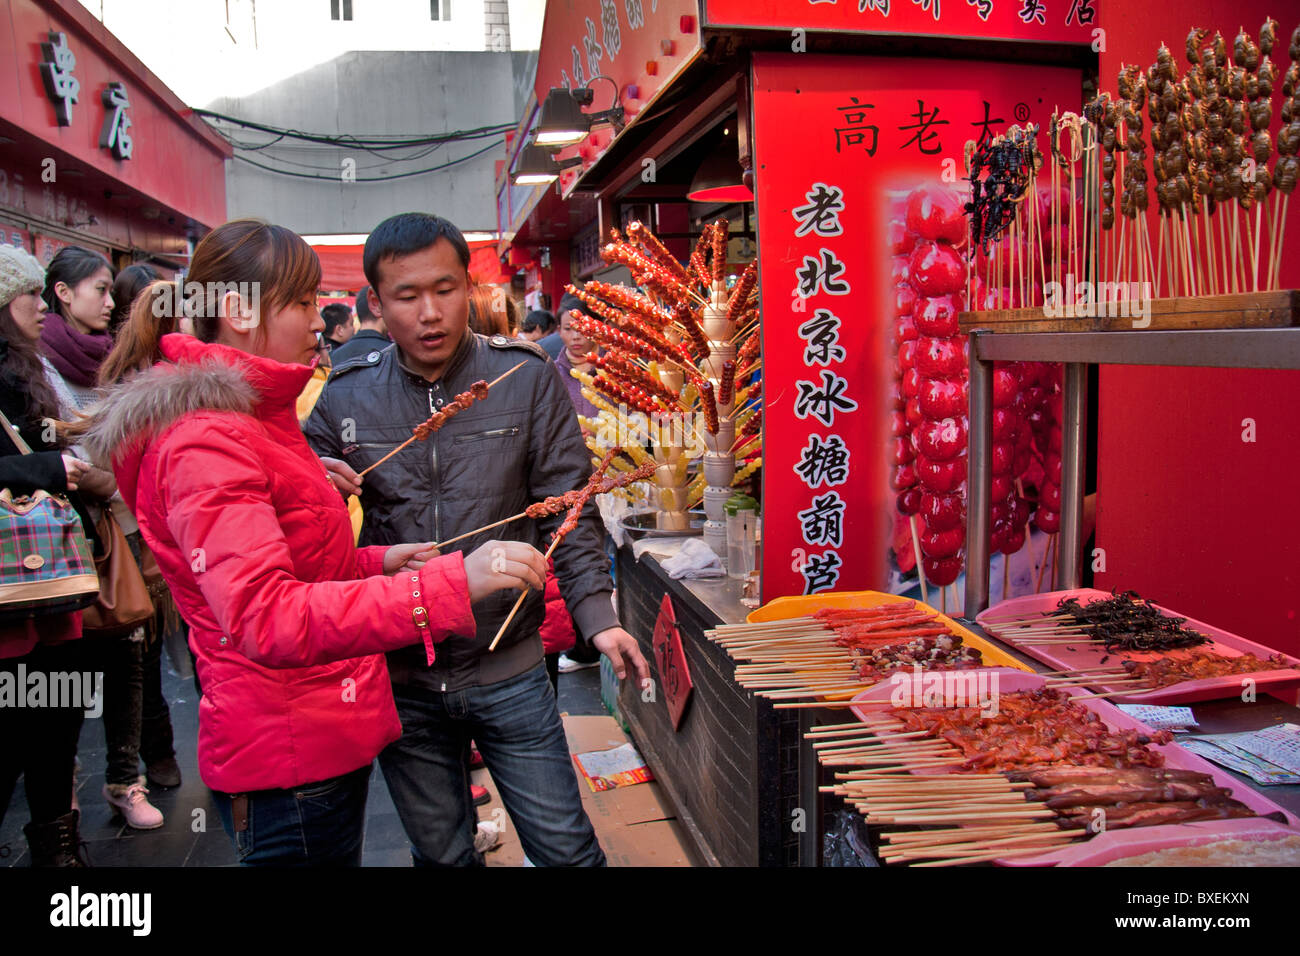 People eating at food market in Wangfujing street, Beijing, China Stock Photo